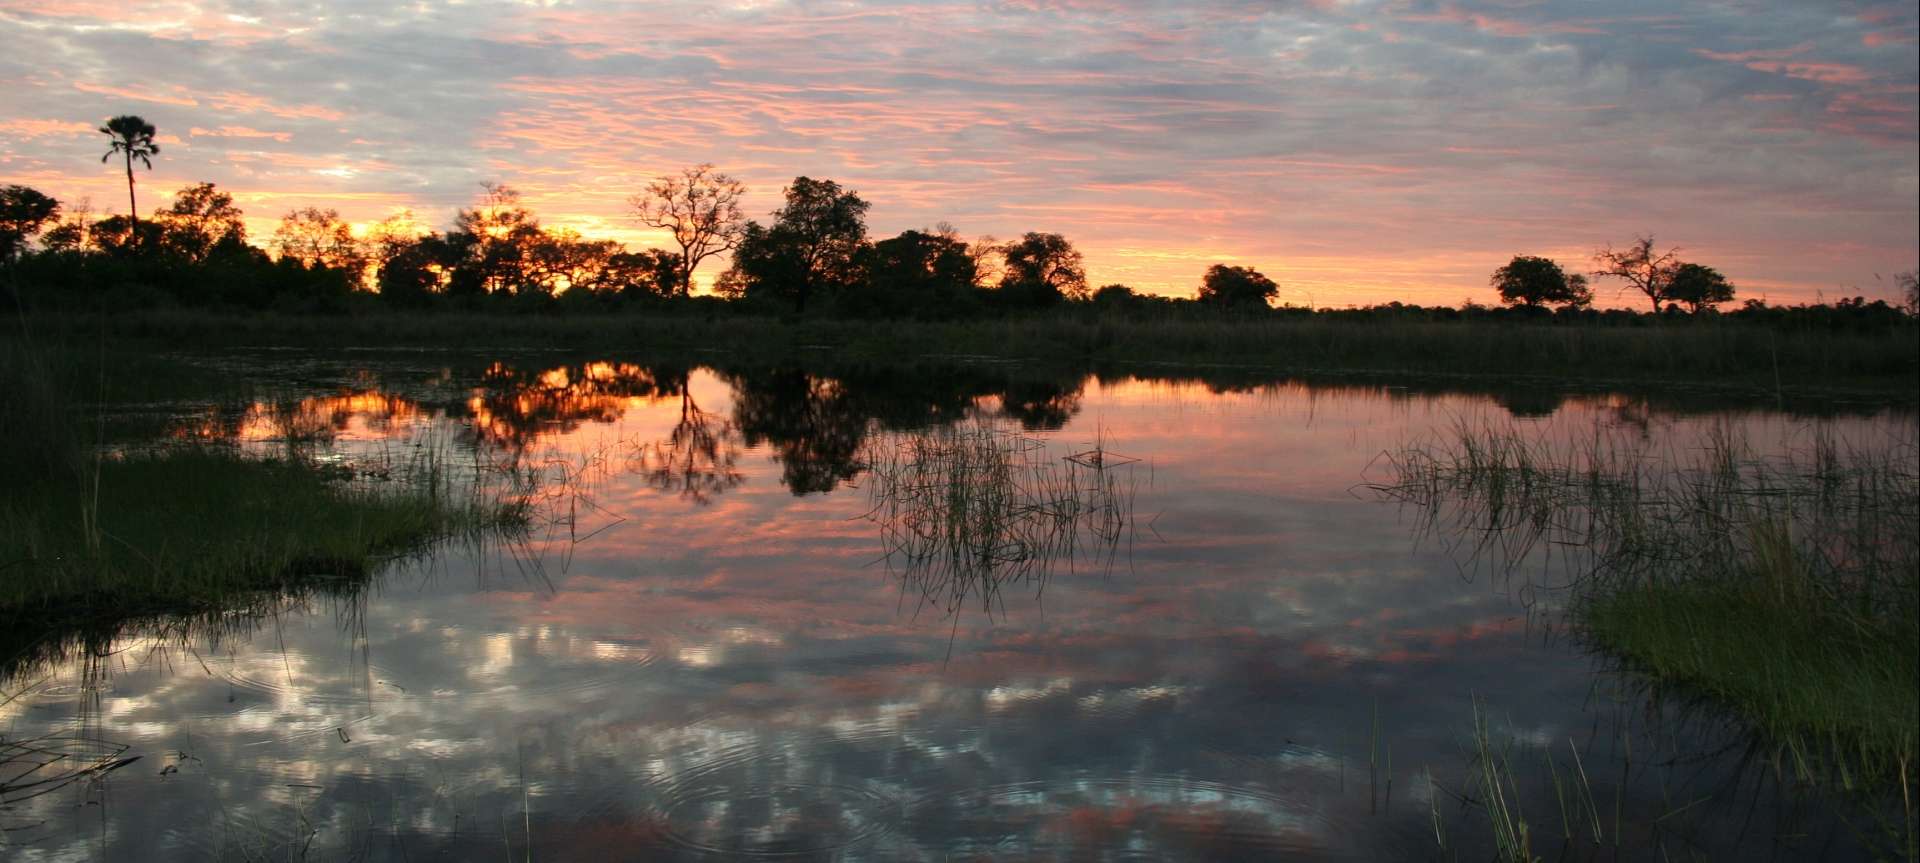 The Okavango Delta is a magical place